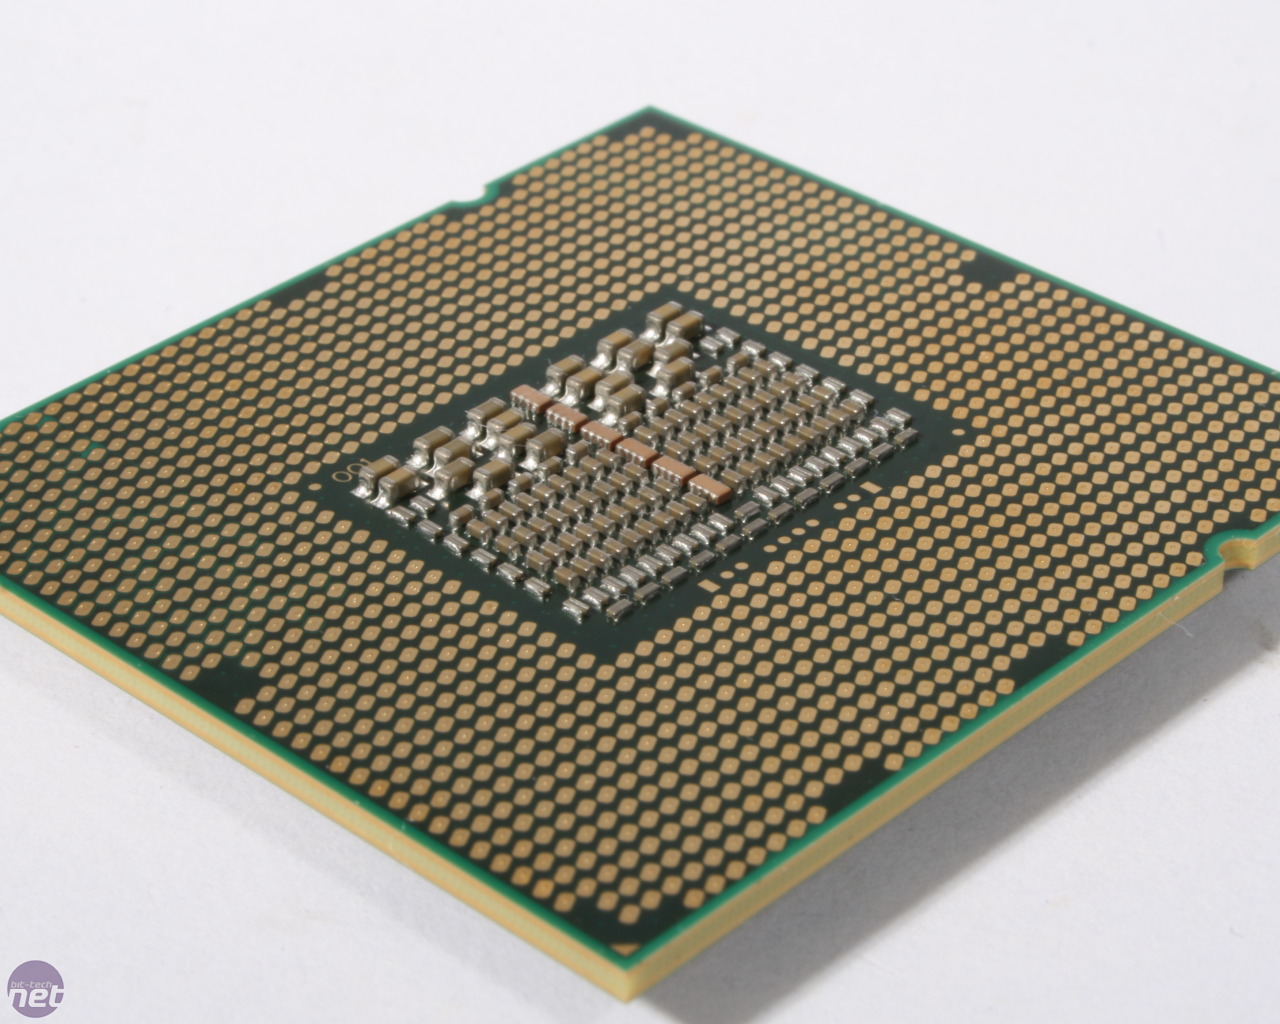 Intel Core i7-950 |